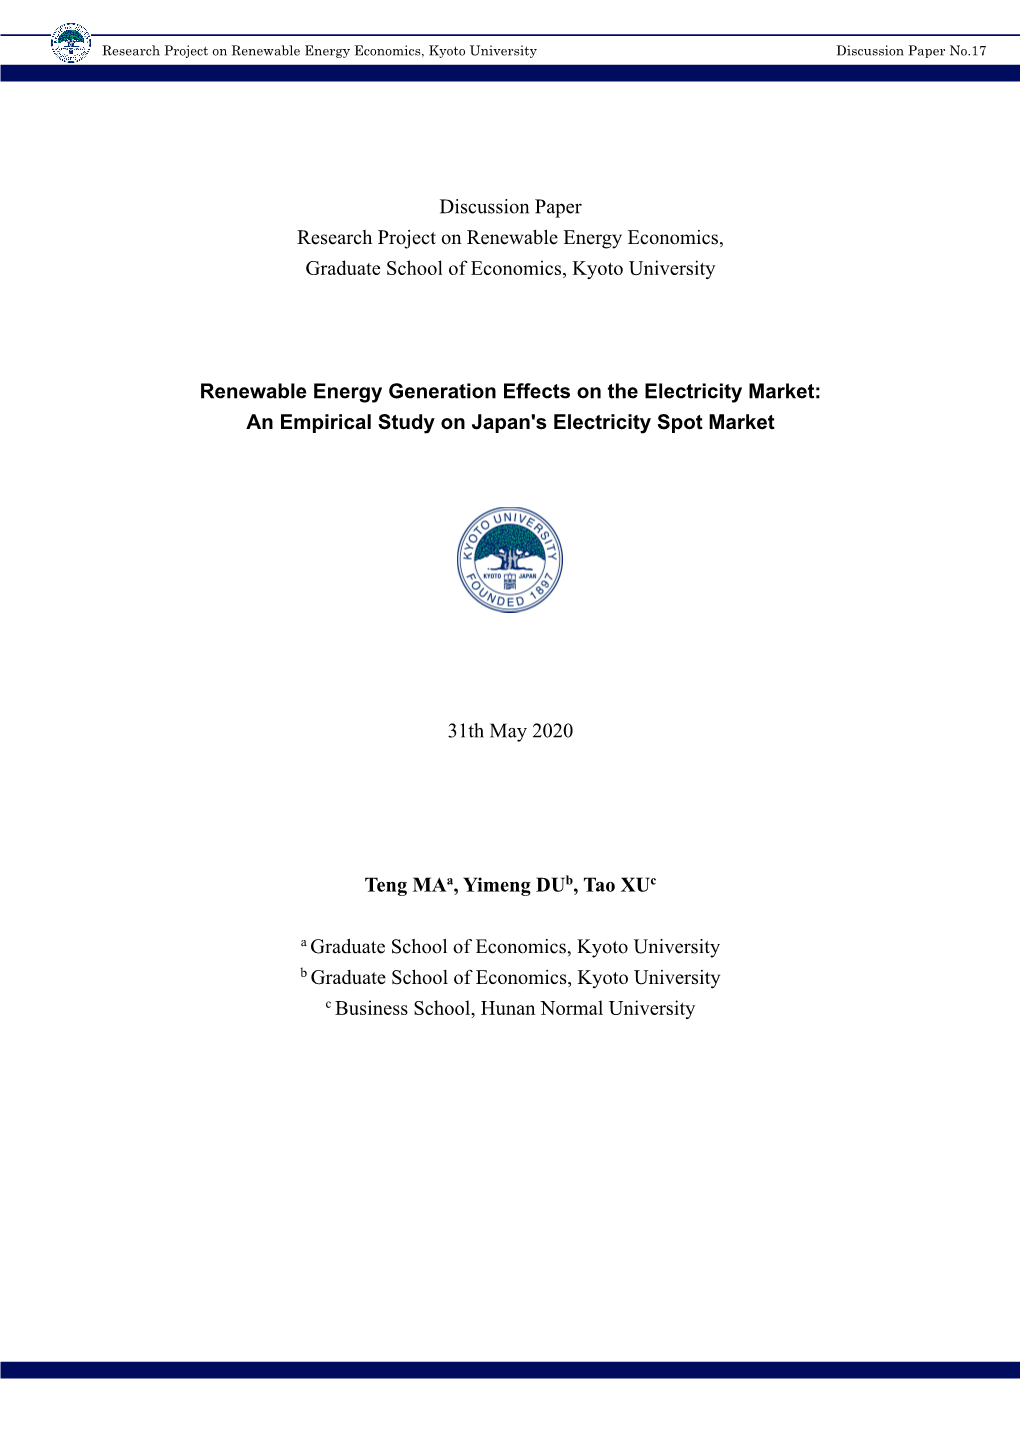 Discussion Paper Research Project on Renewable Energy Economics, Graduate School of Economics, Kyoto University